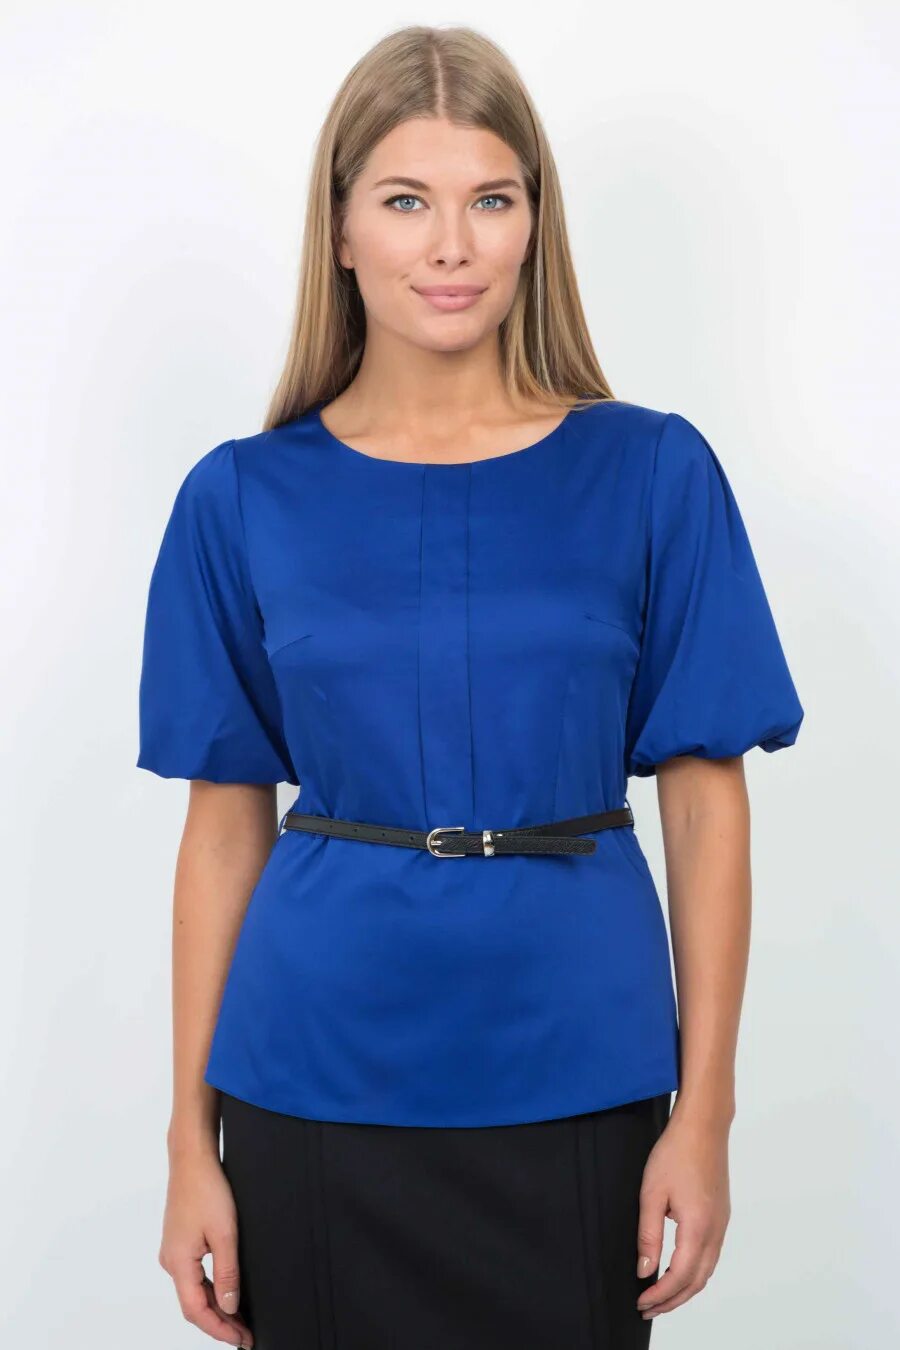 Блузка Emka. Emka Fashion рубашка. Синяя блузка. Блузка синяя женская. Каталог емка